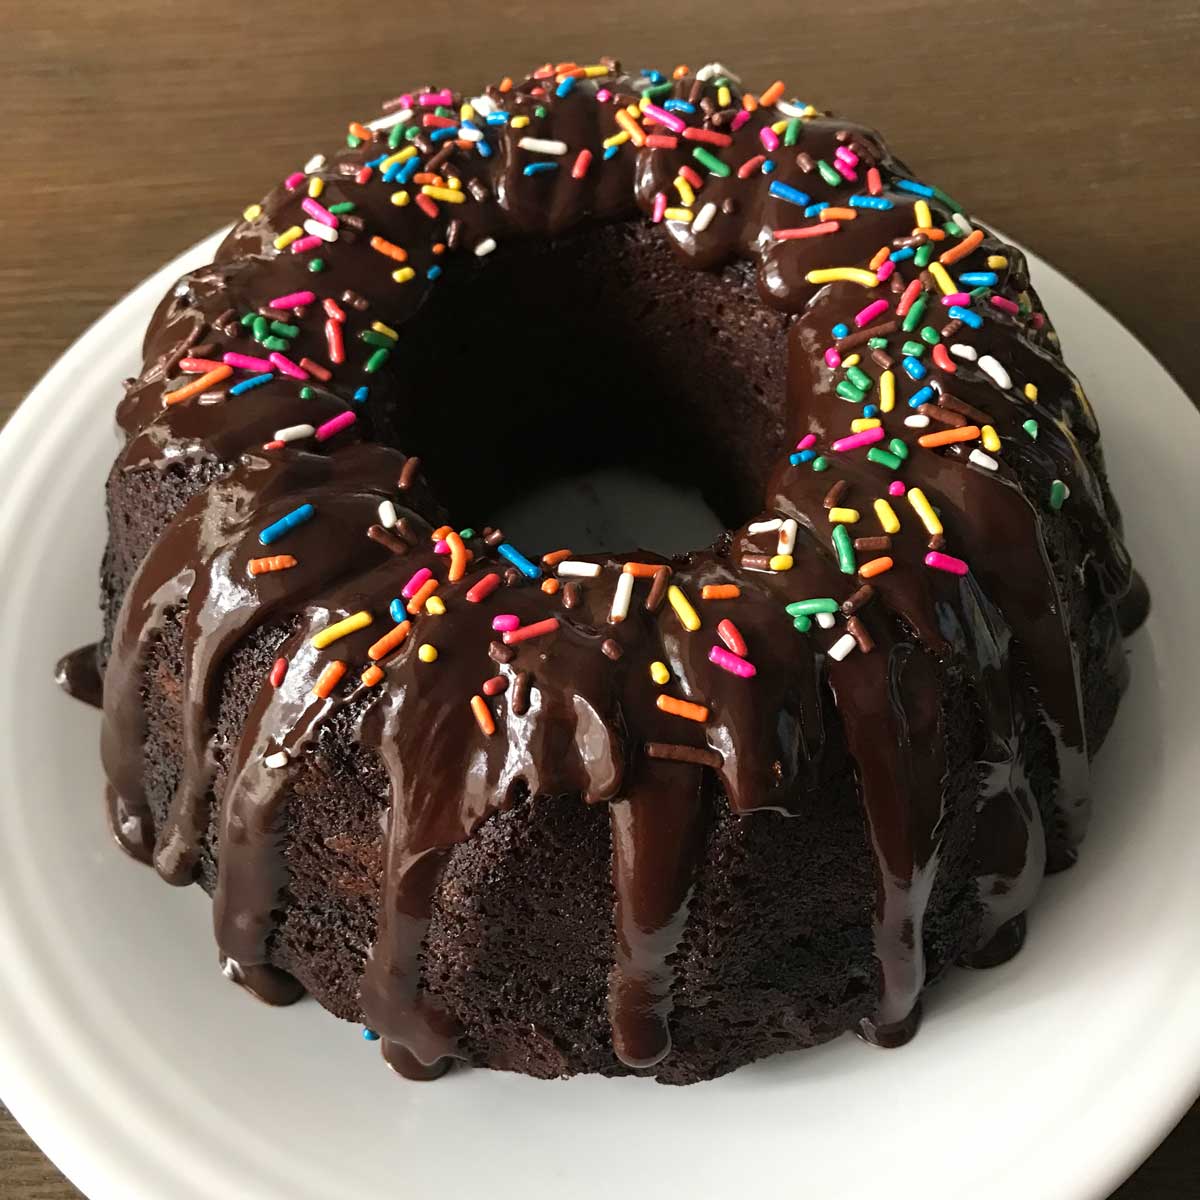 https://www.cookiemadness.net/wp-content/uploads/2020/03/chocolate-bundt-cake.jpg